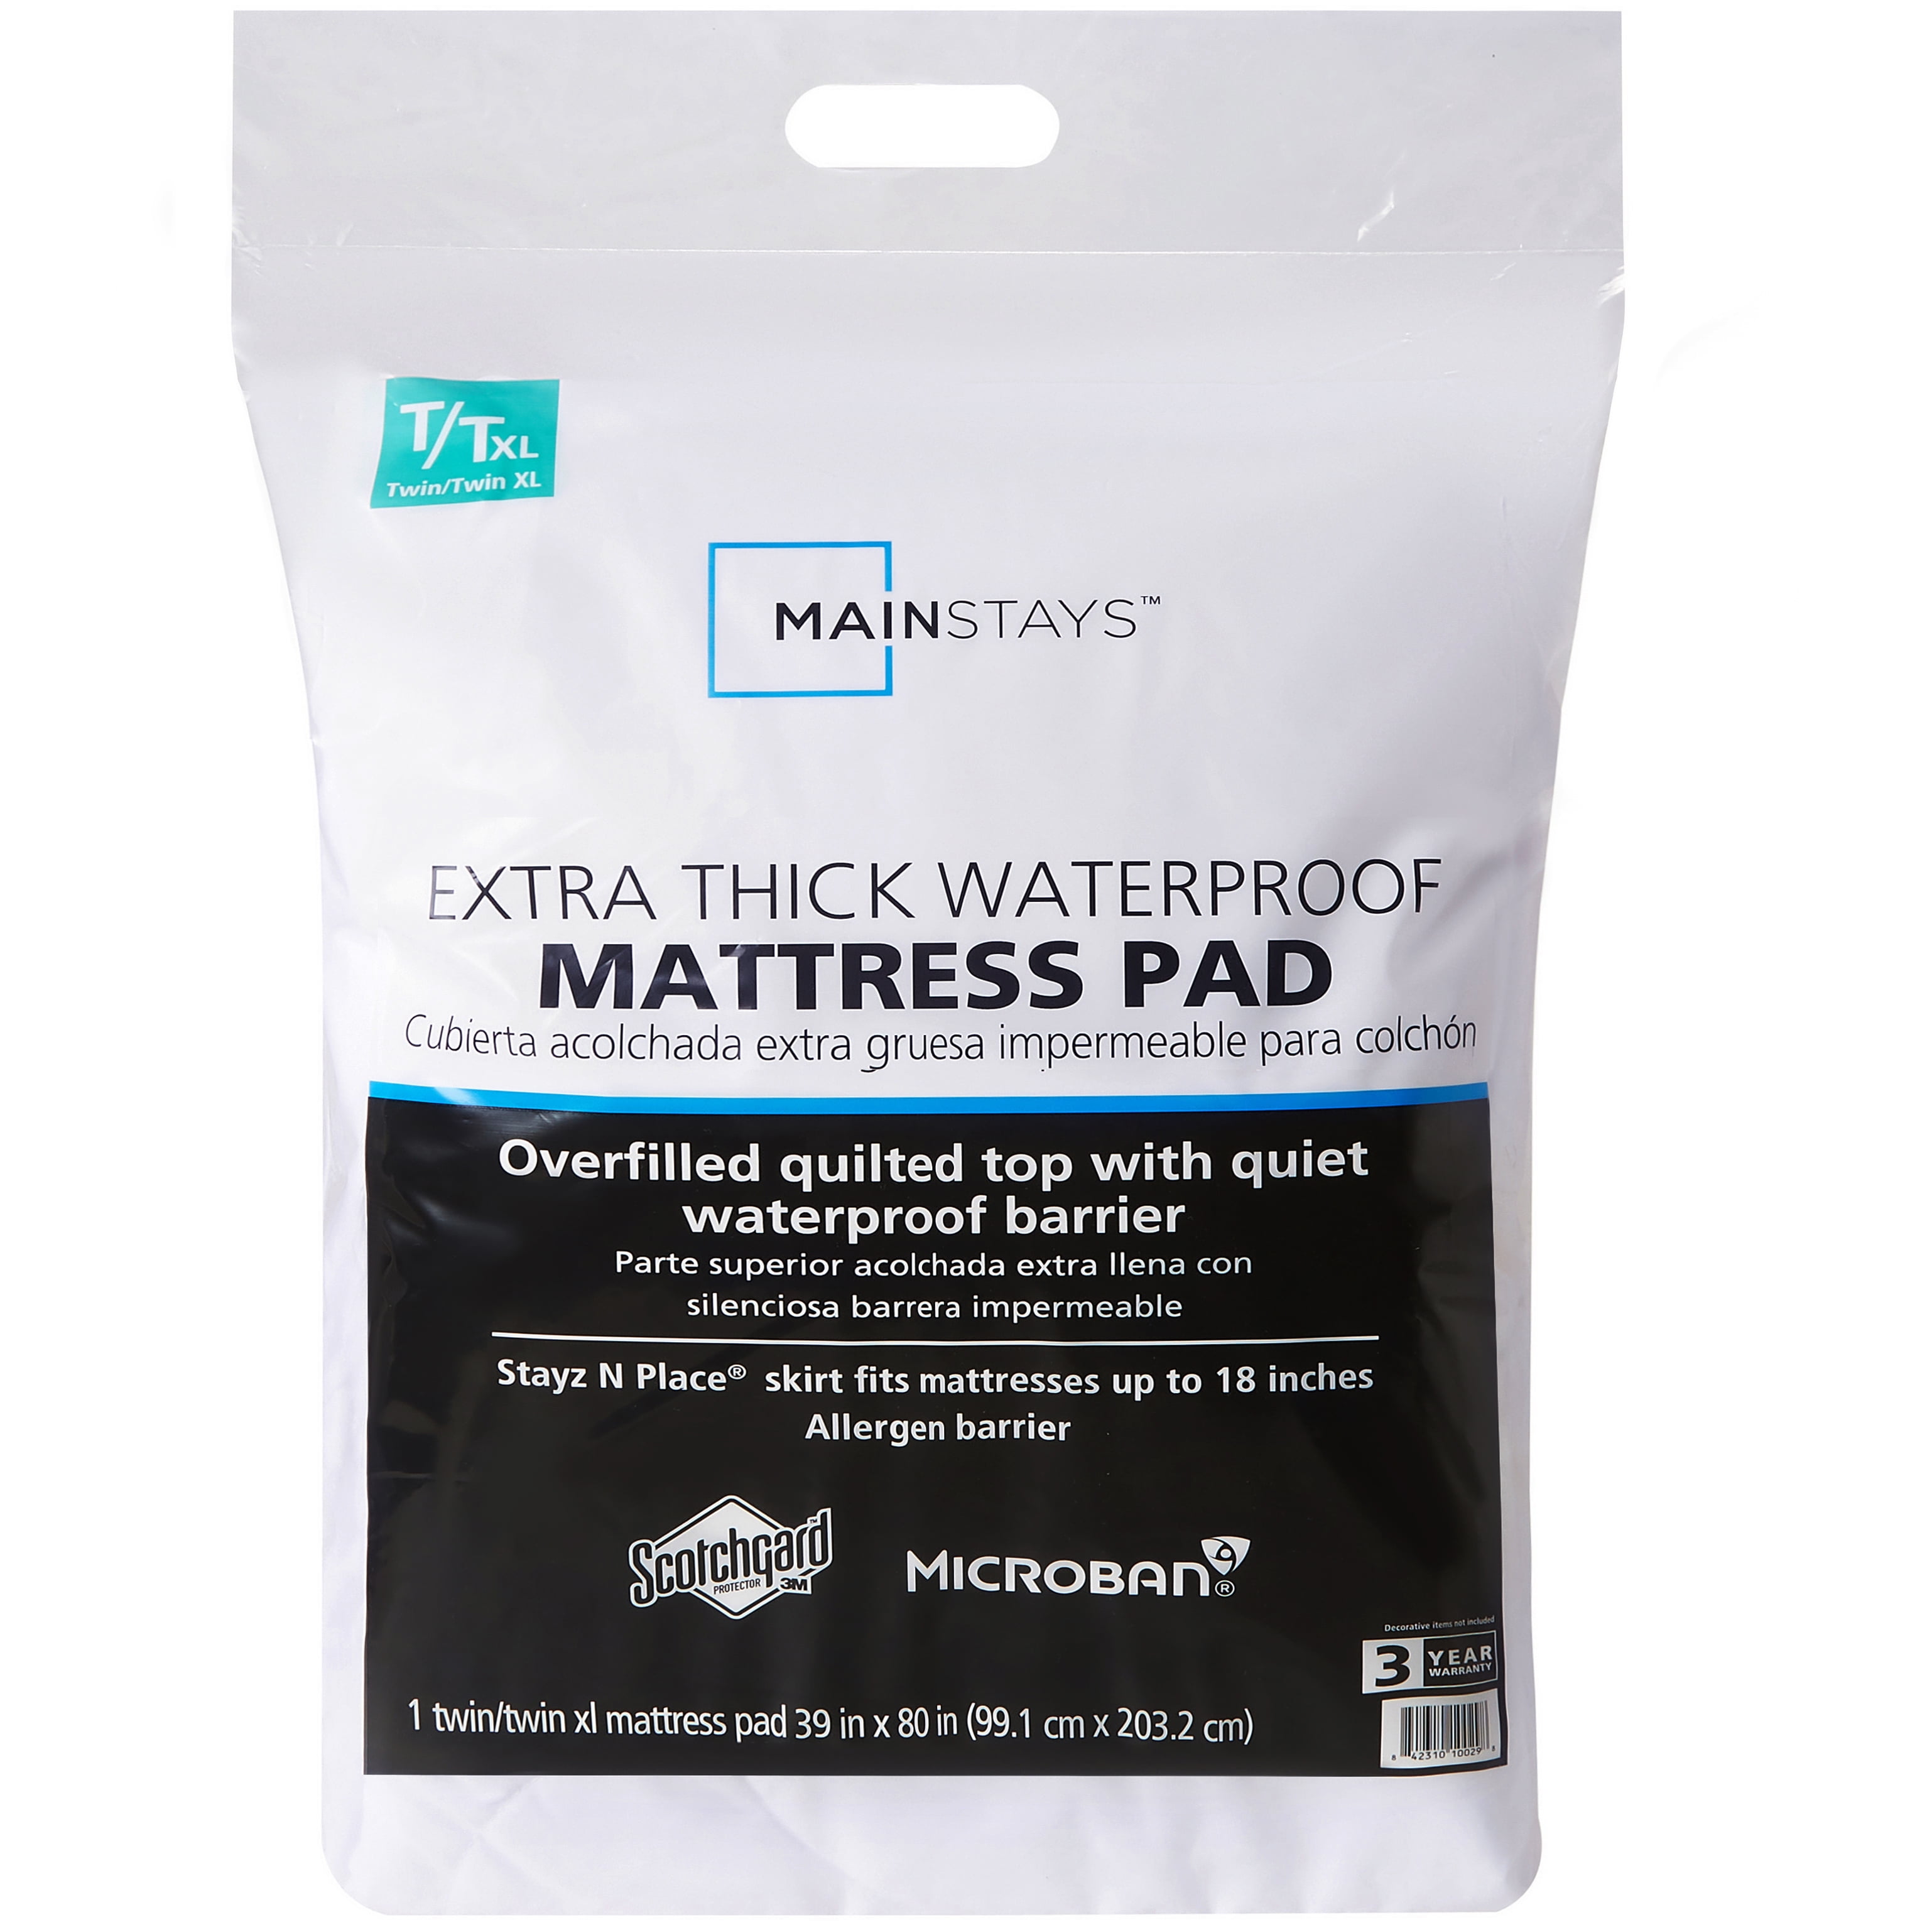 Mainstays Extra Thick Waterproof Mattress Pad, Twin/Twin-XL